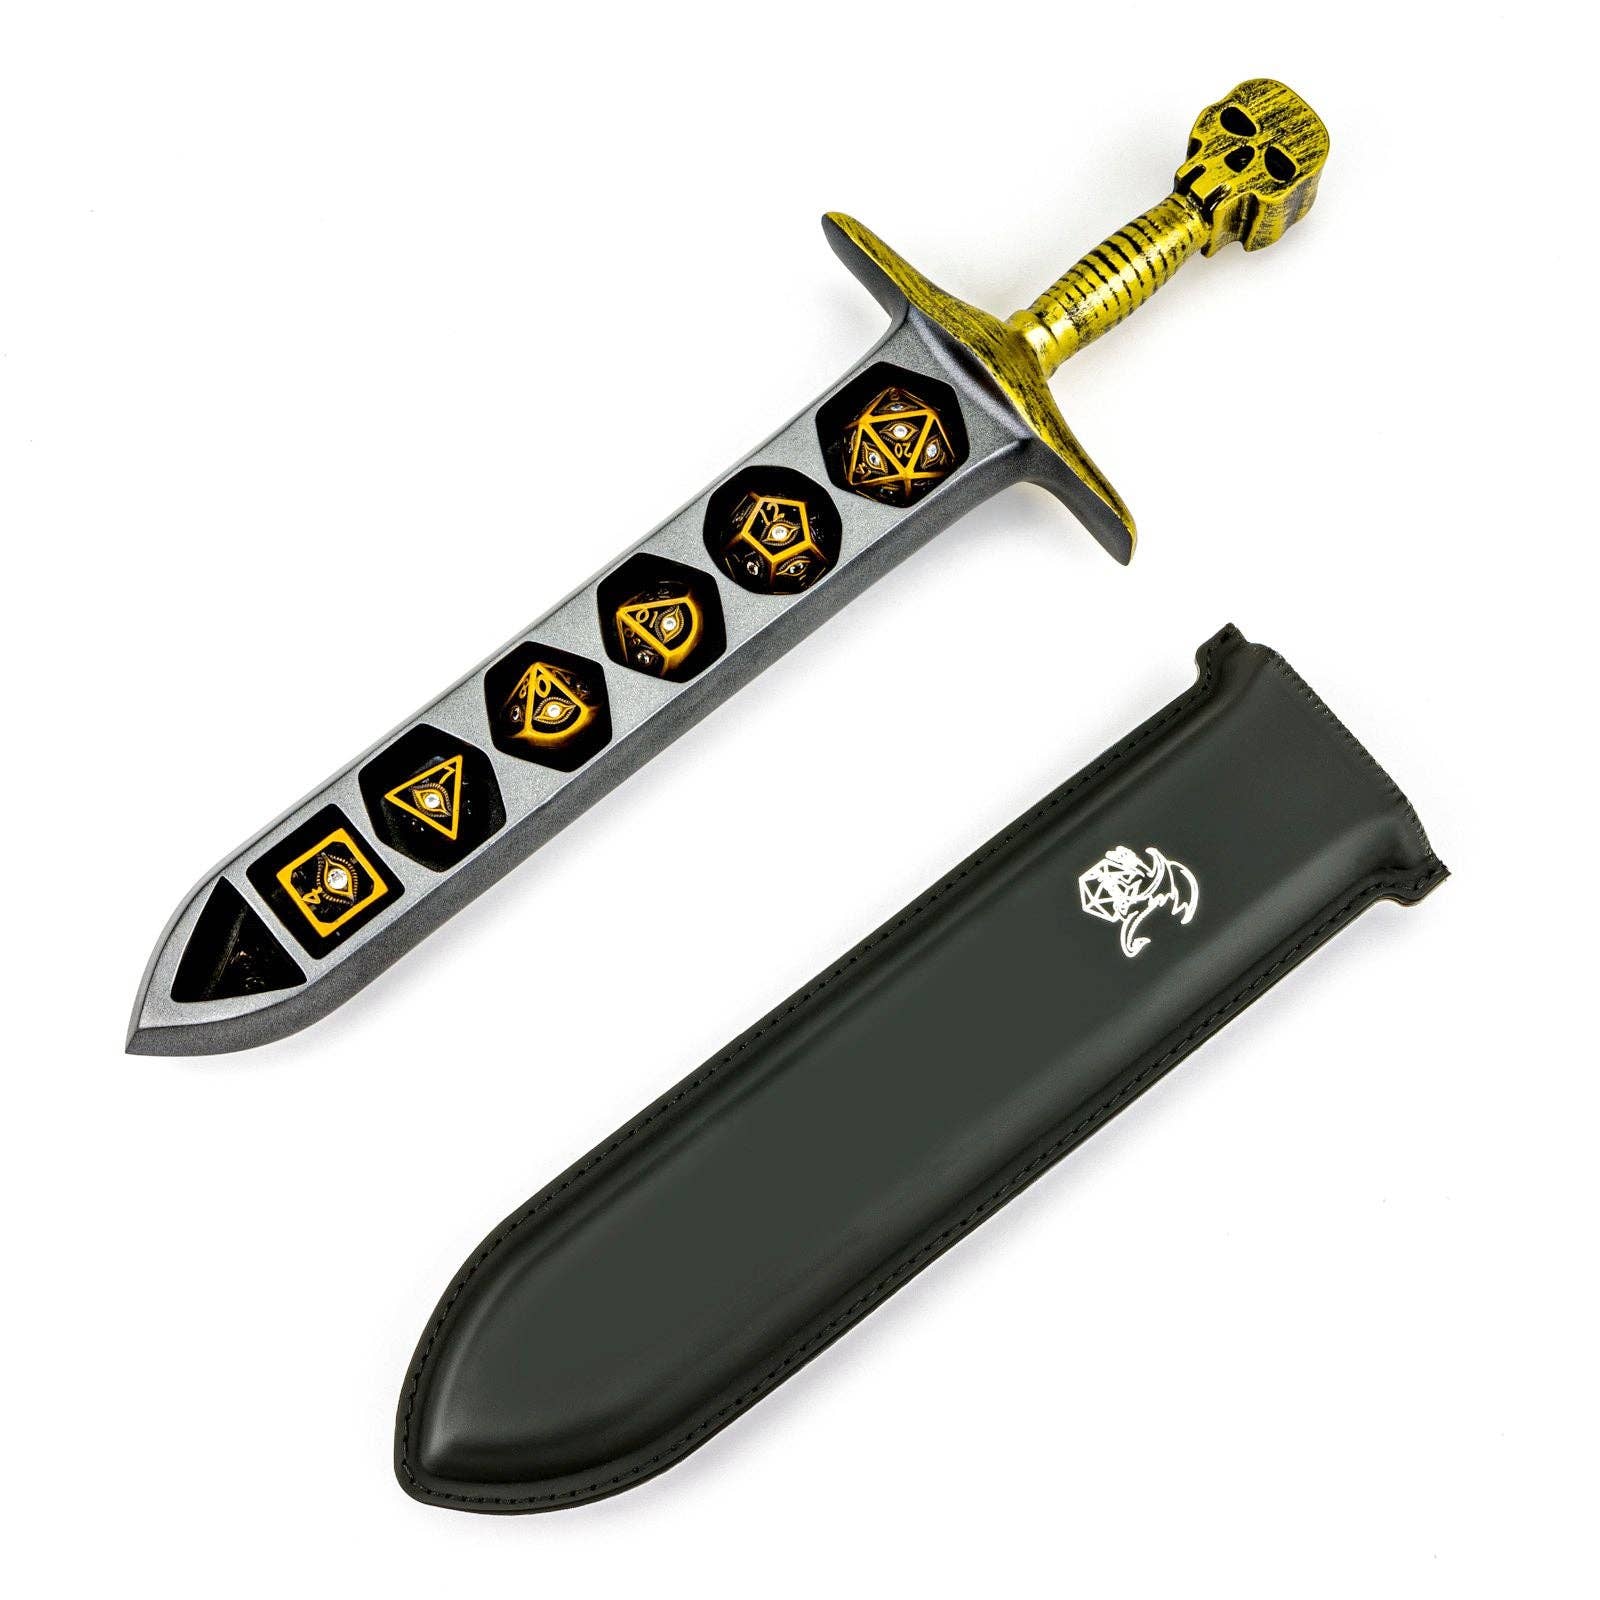 Hymgho Premium Dice - Grim Dagger Dice Case with sheath cover - Gold